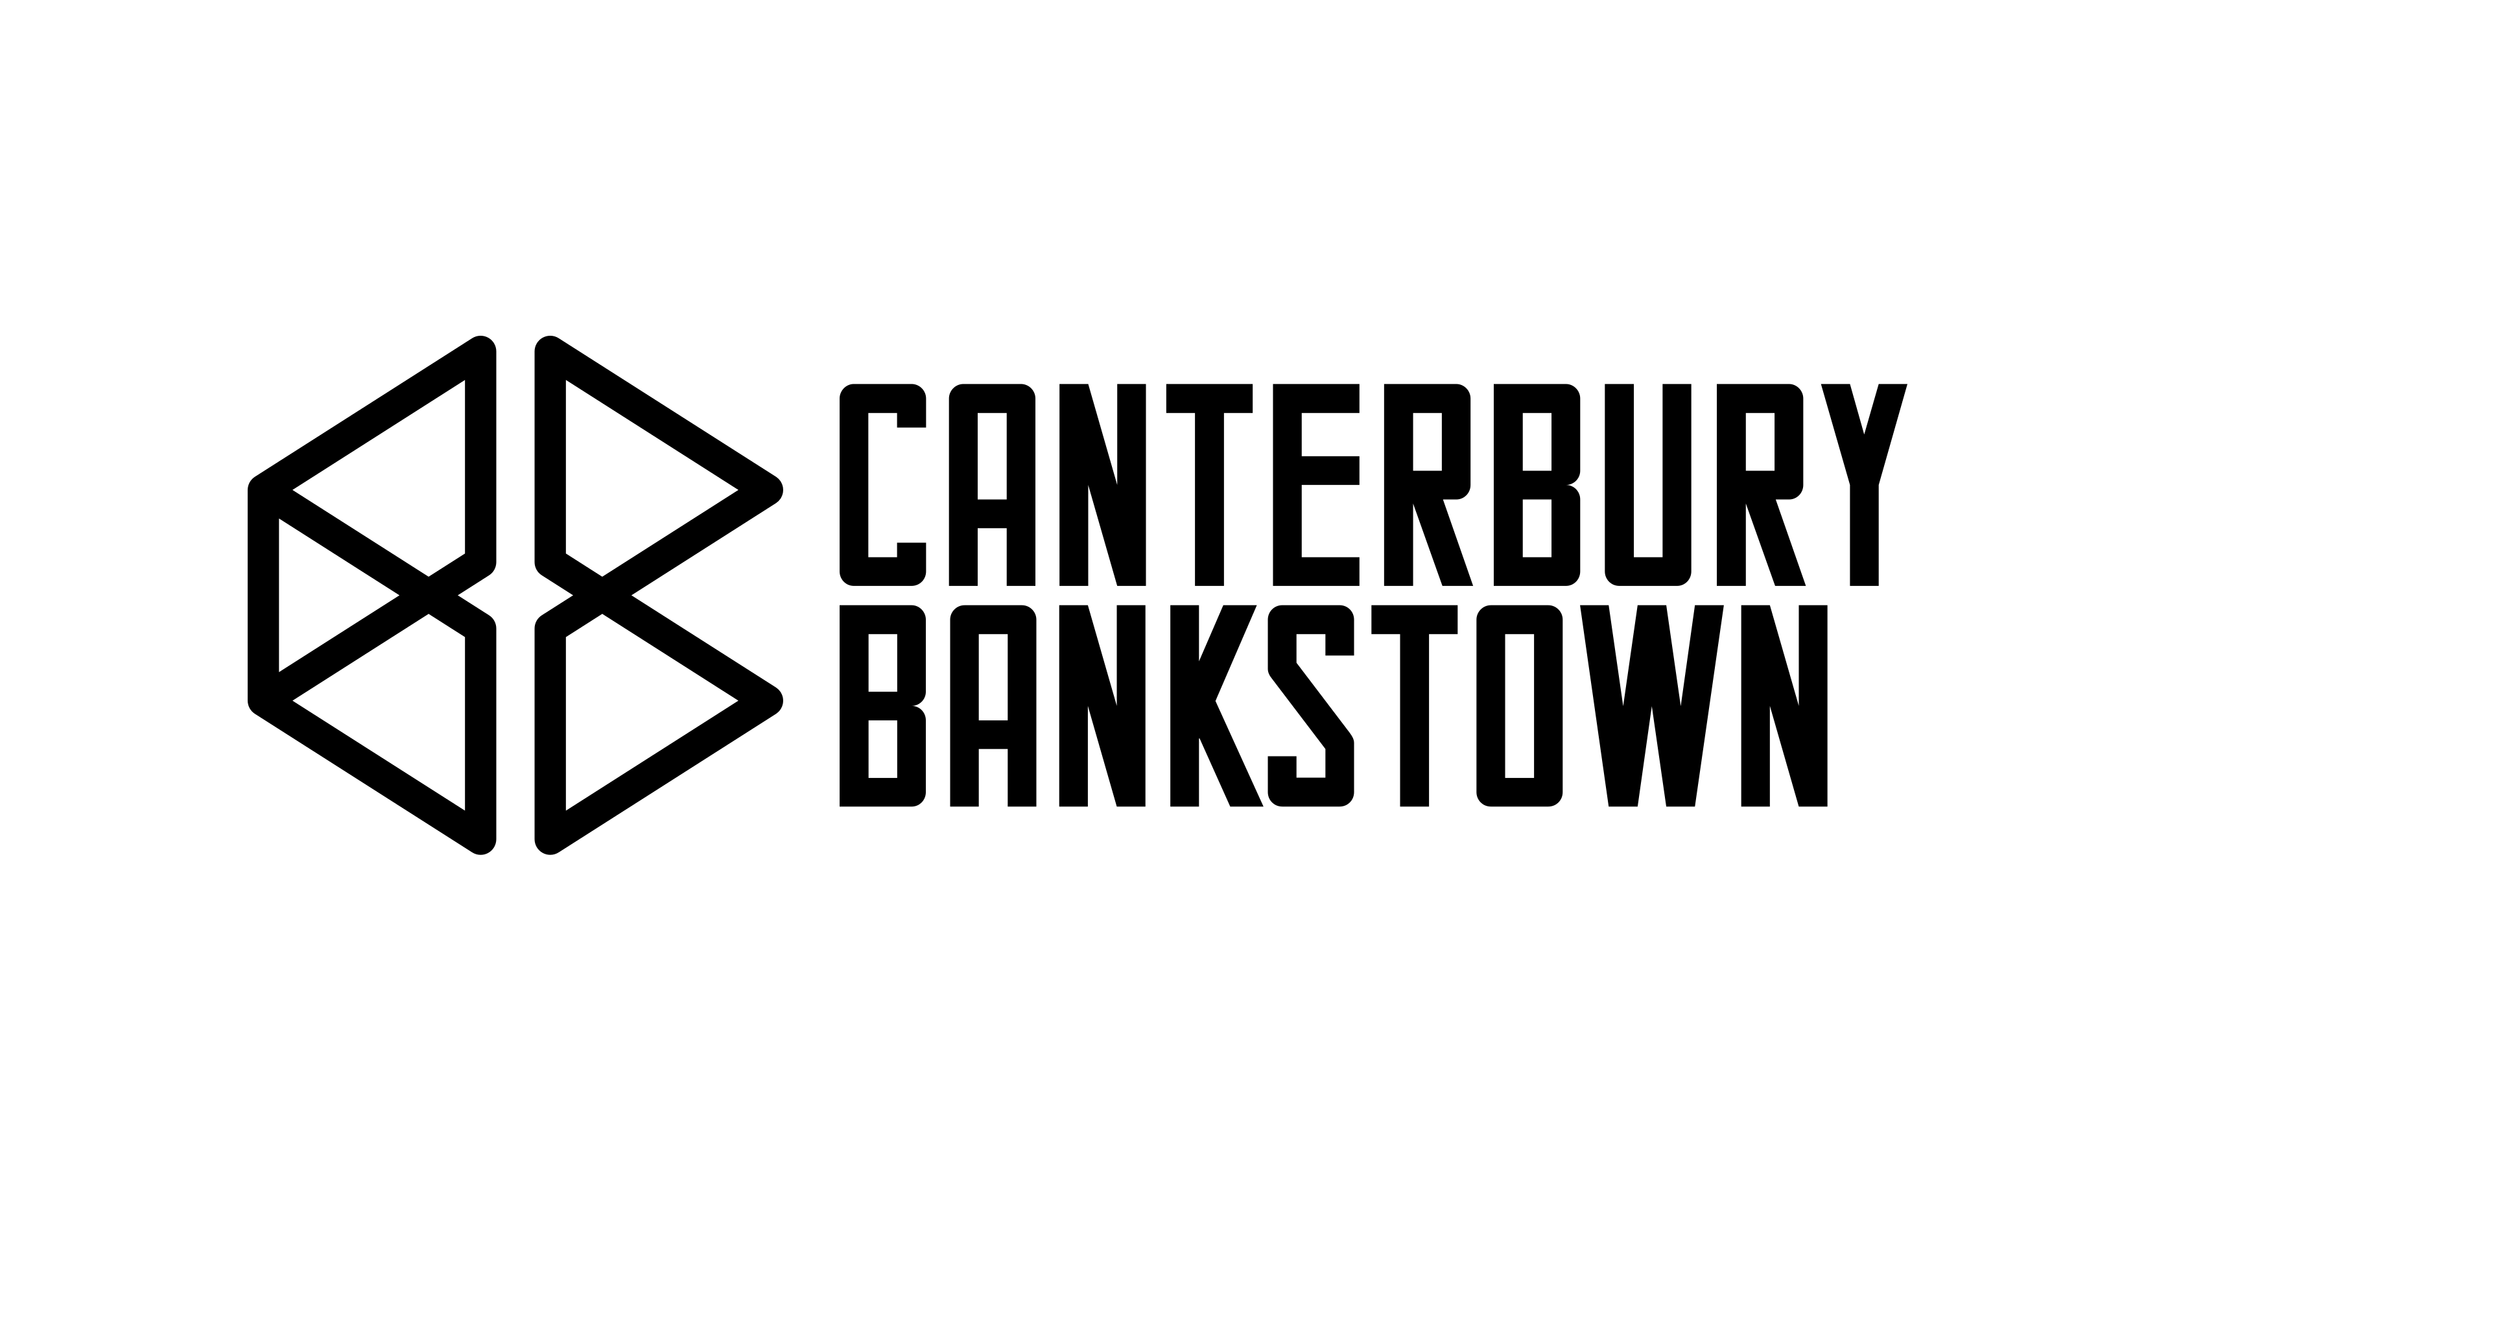 City_of_Canterbury-Bankstown.png